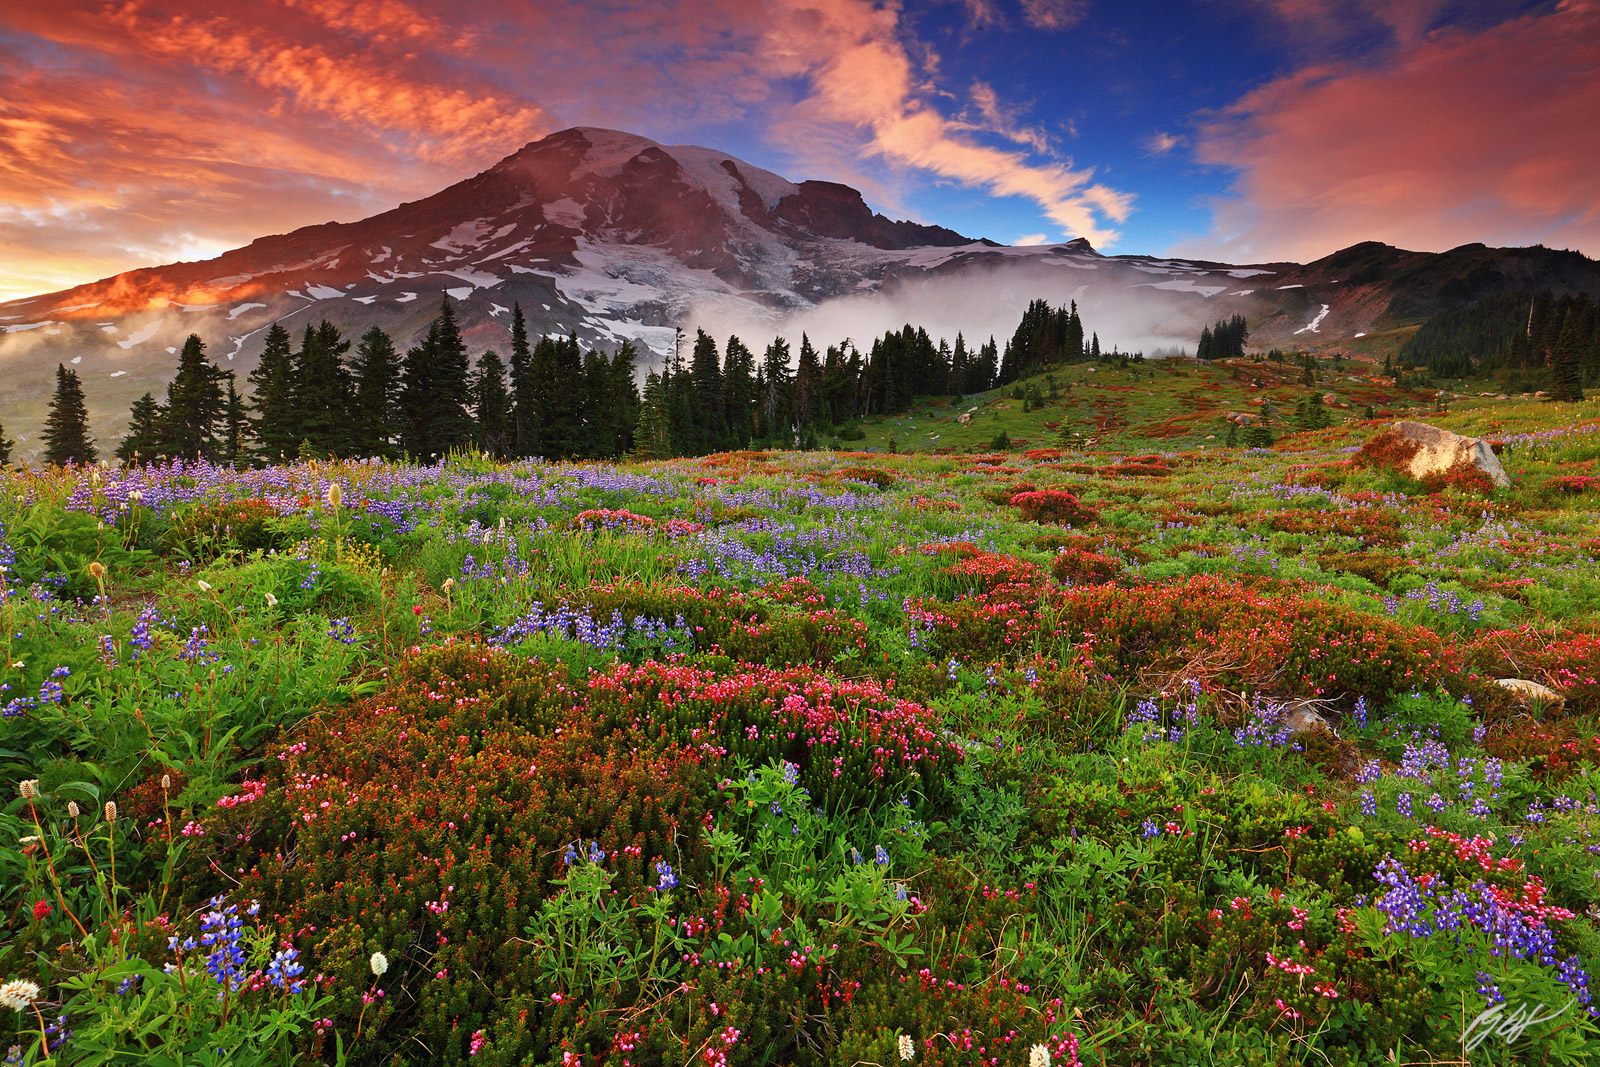 Sunset Wildflowers and Mt Rainier from Paradise Meadows, Mt Rainier National Park in Washington